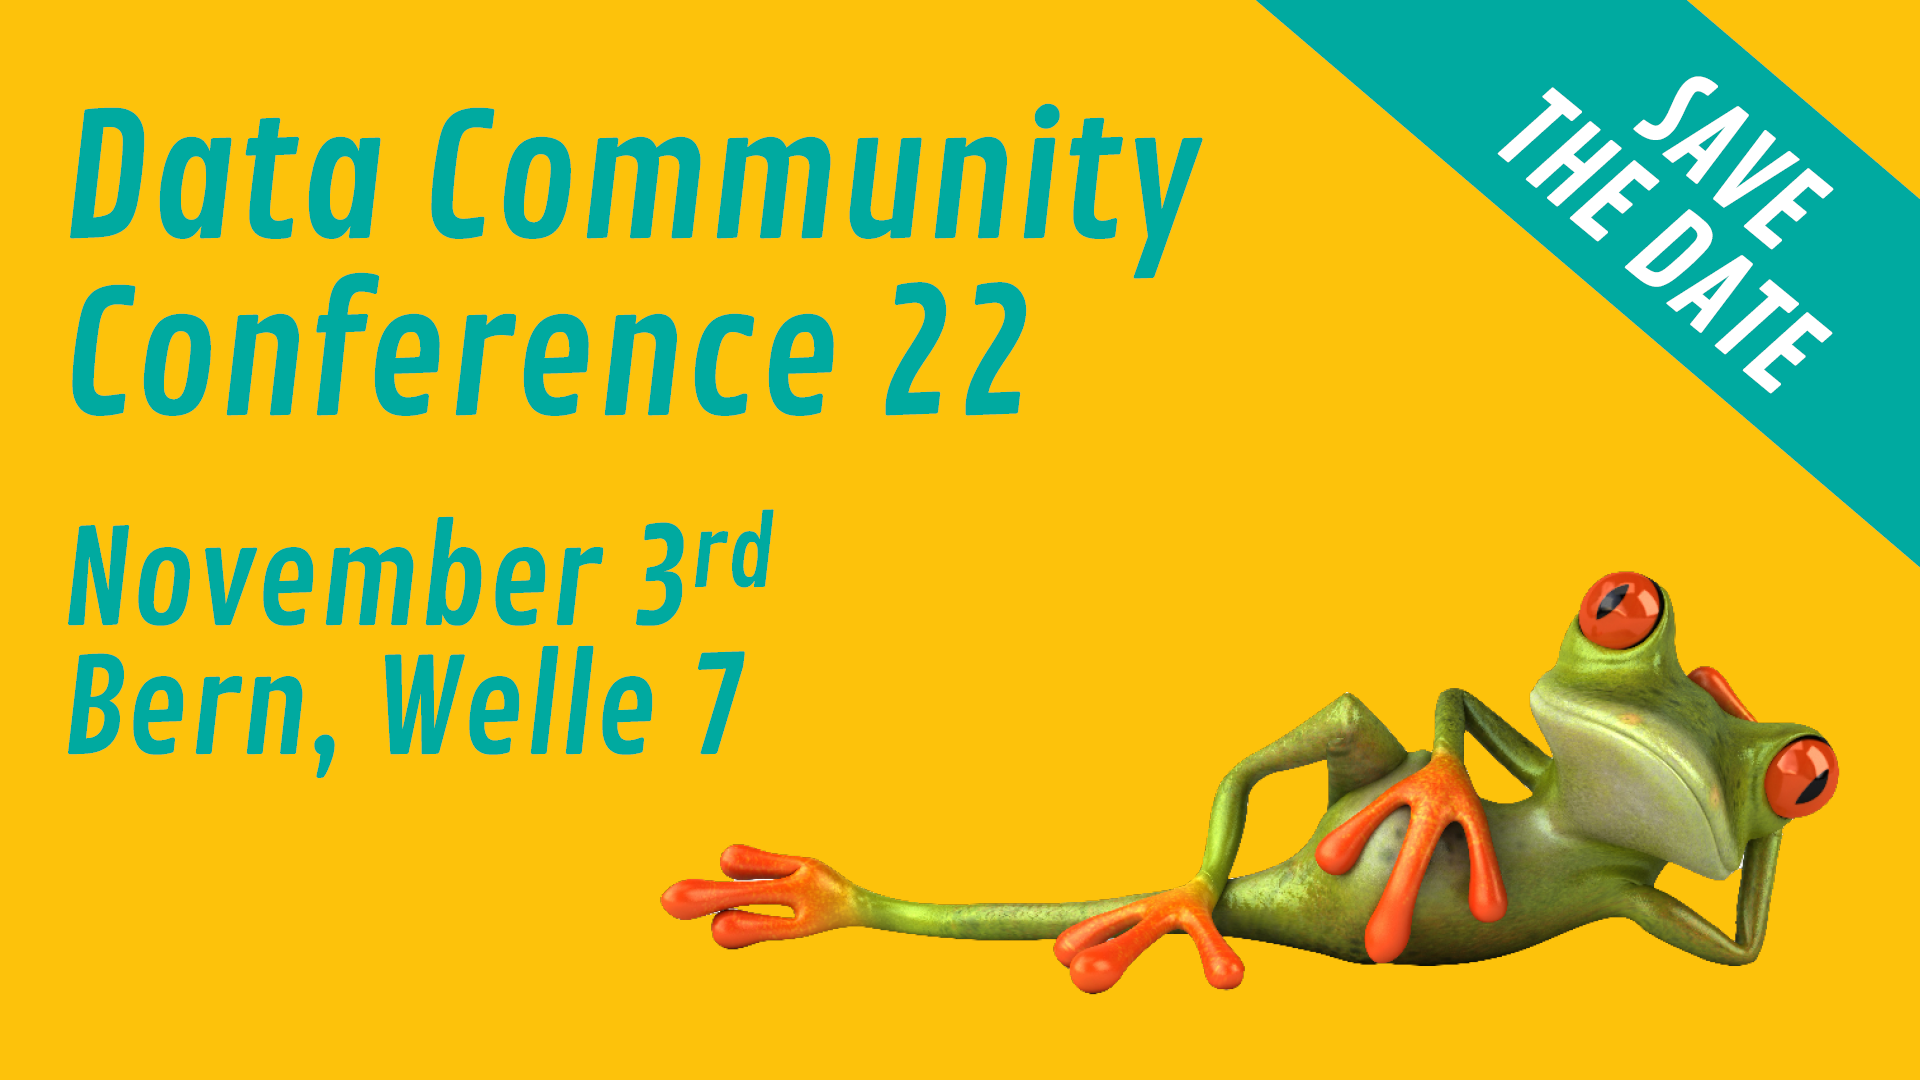 Data Community Conference 2022 organized by Ewa Ming